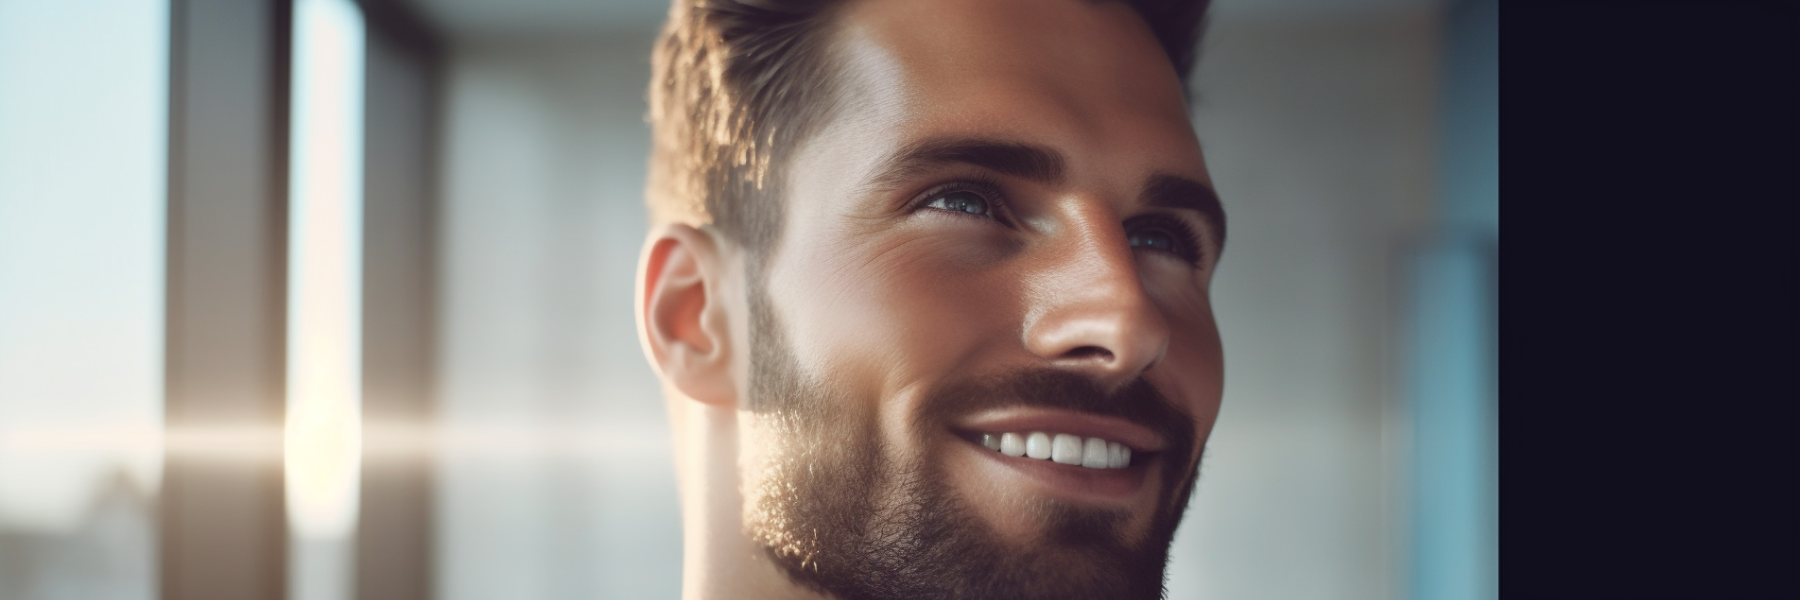 Bags Under Eyes Men? Your Guide to Men's Eye Cream